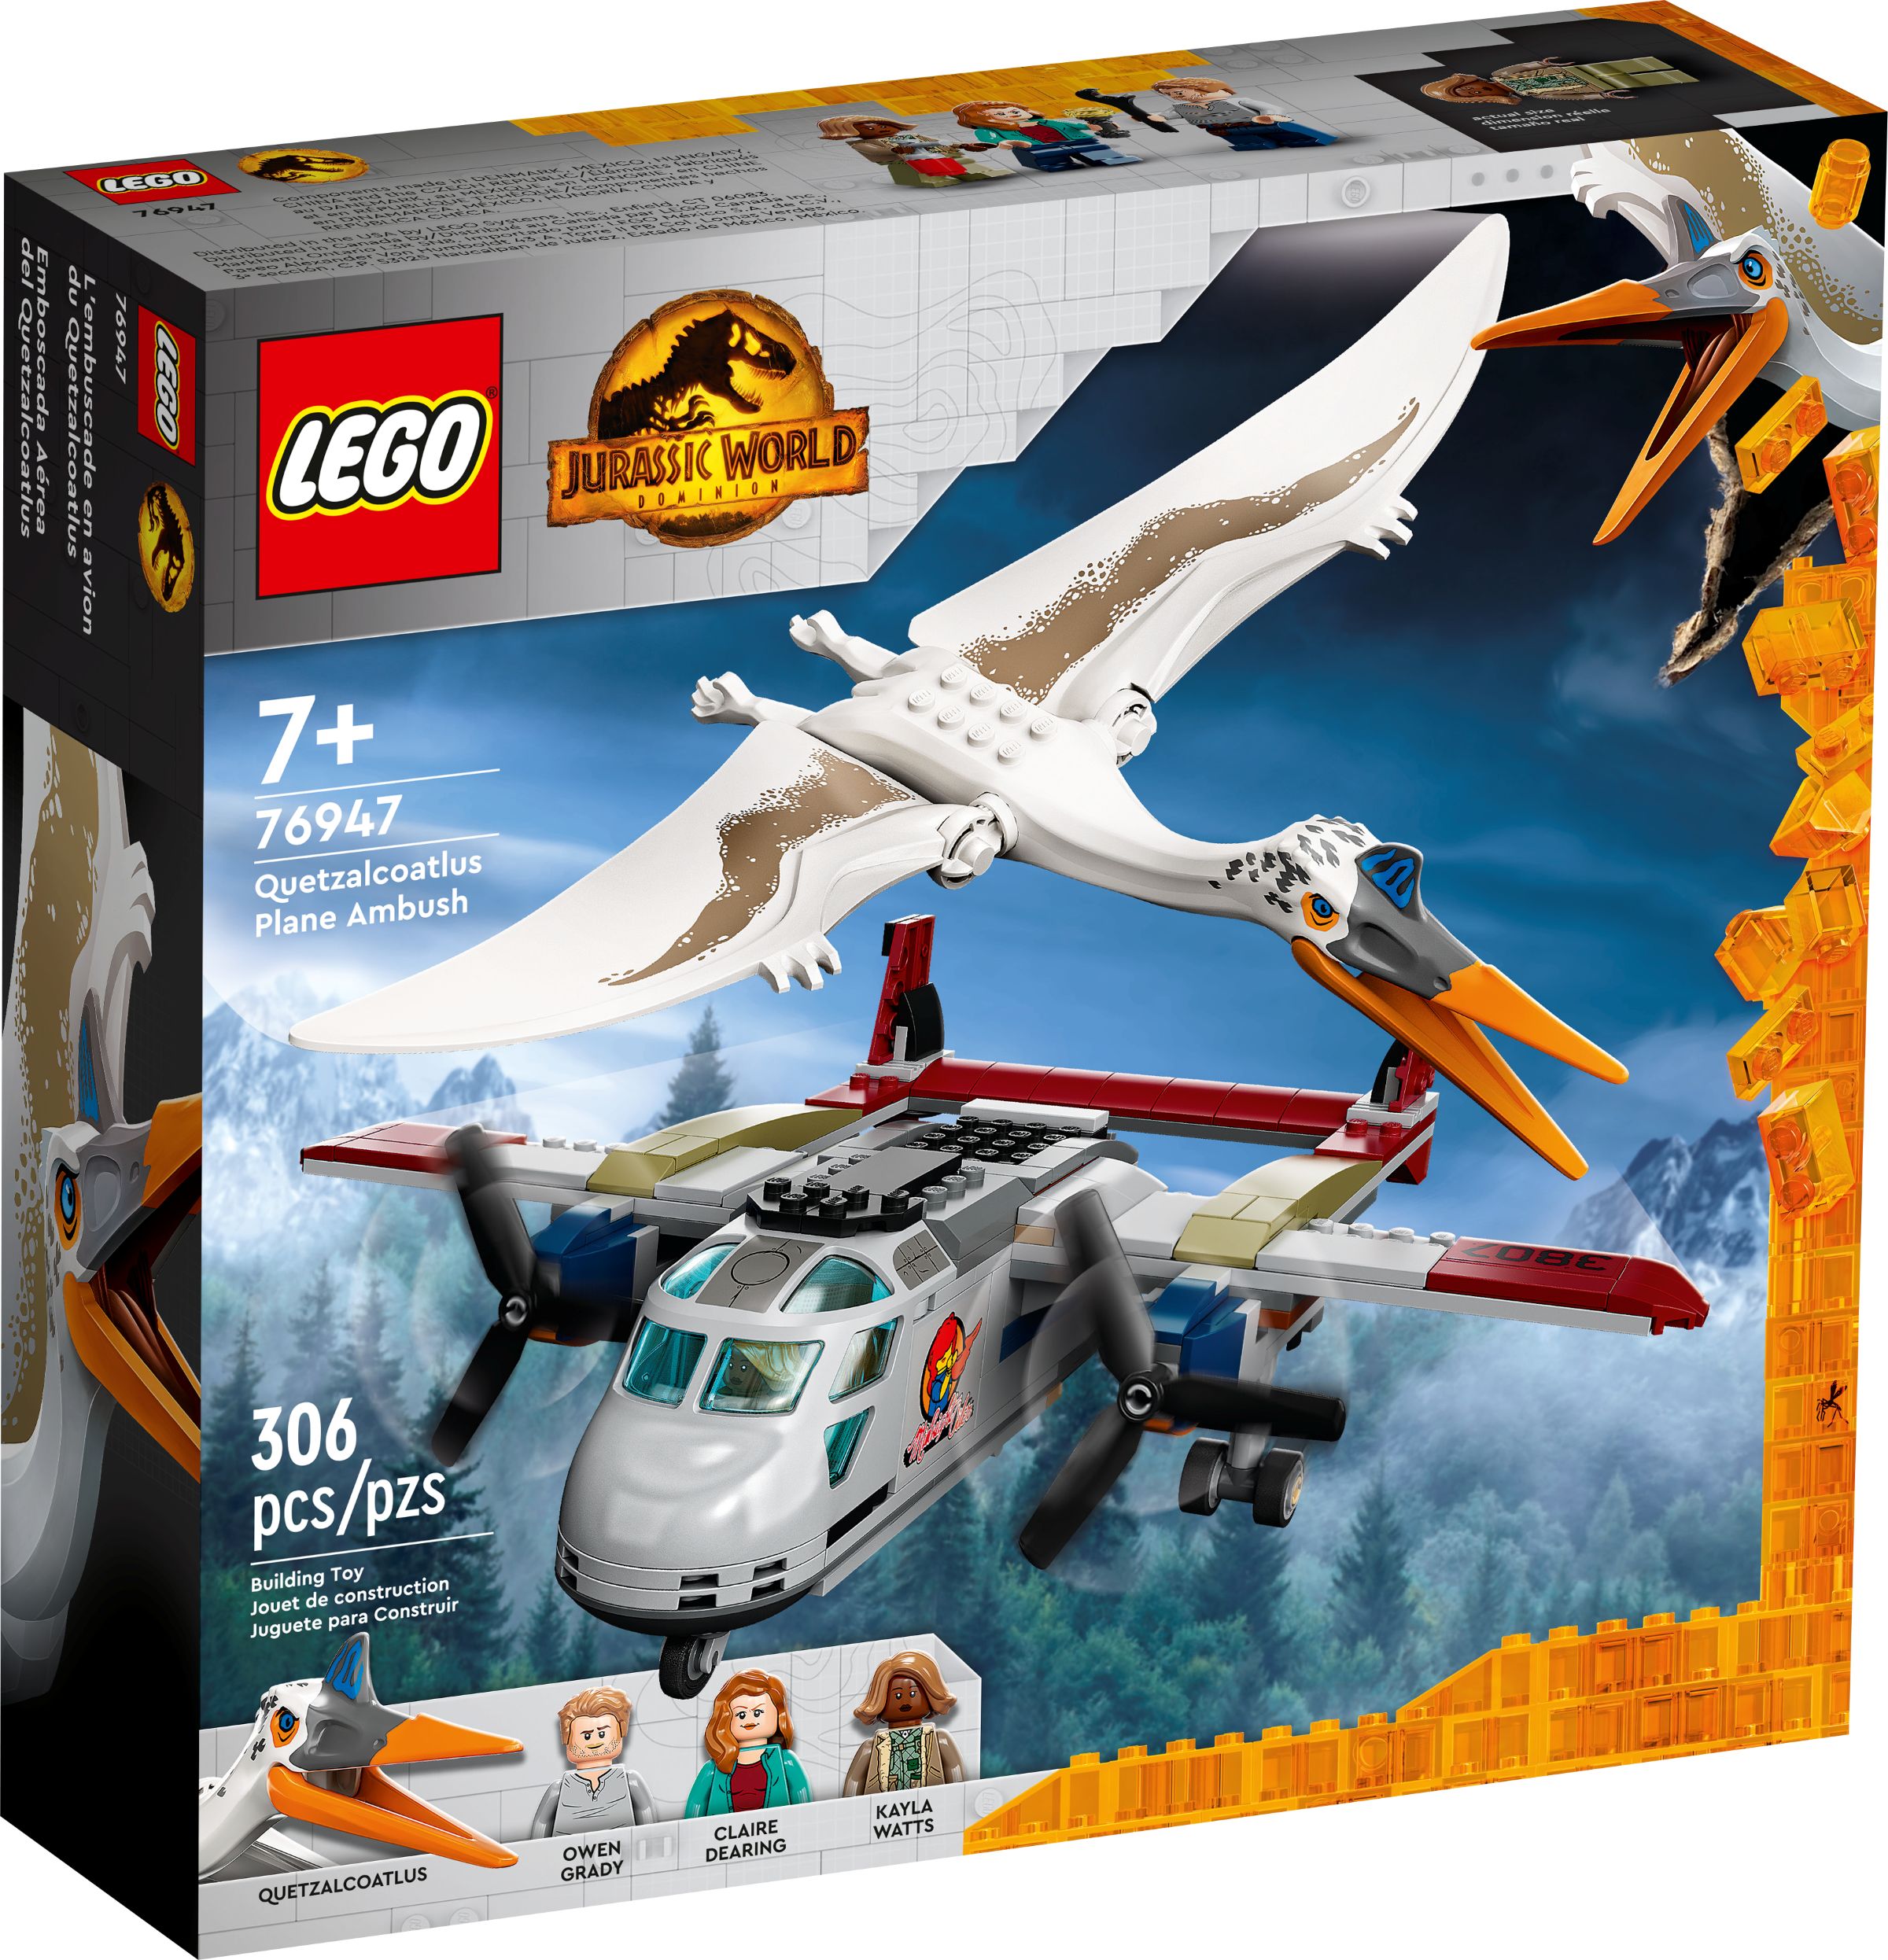 LEGO Jurassic World 76947 Quetzalcoatlus: Flugzeug-Überfall LEGO_76947_alt1.jpg